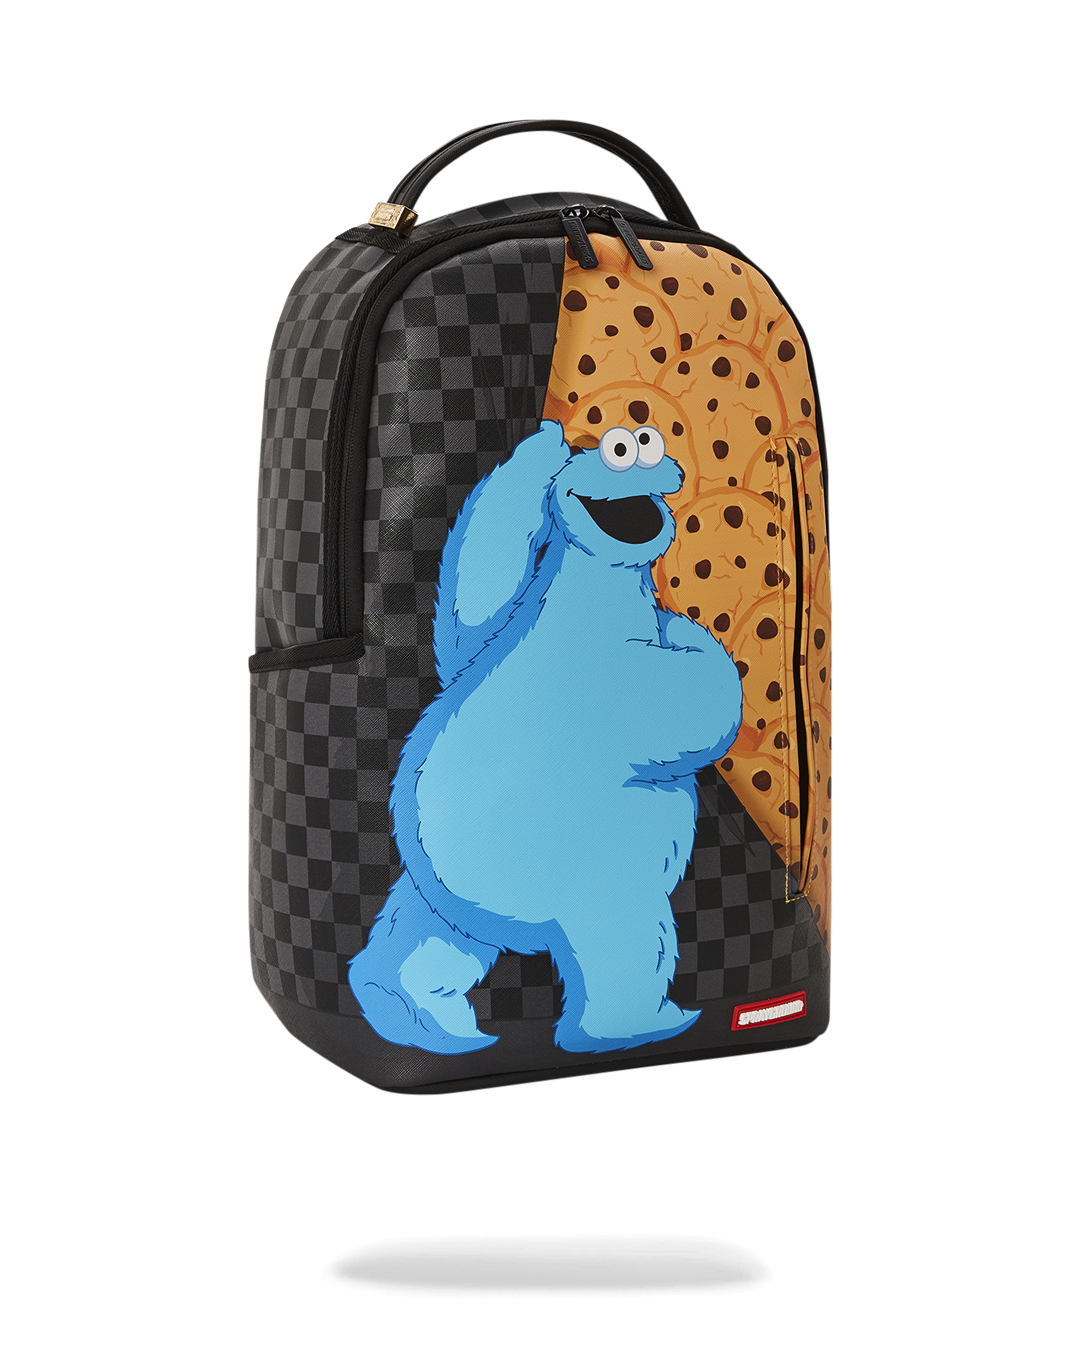 Sprayground Cookie Monster Backpack Sesame Street Blue Laptop Books School  Bag